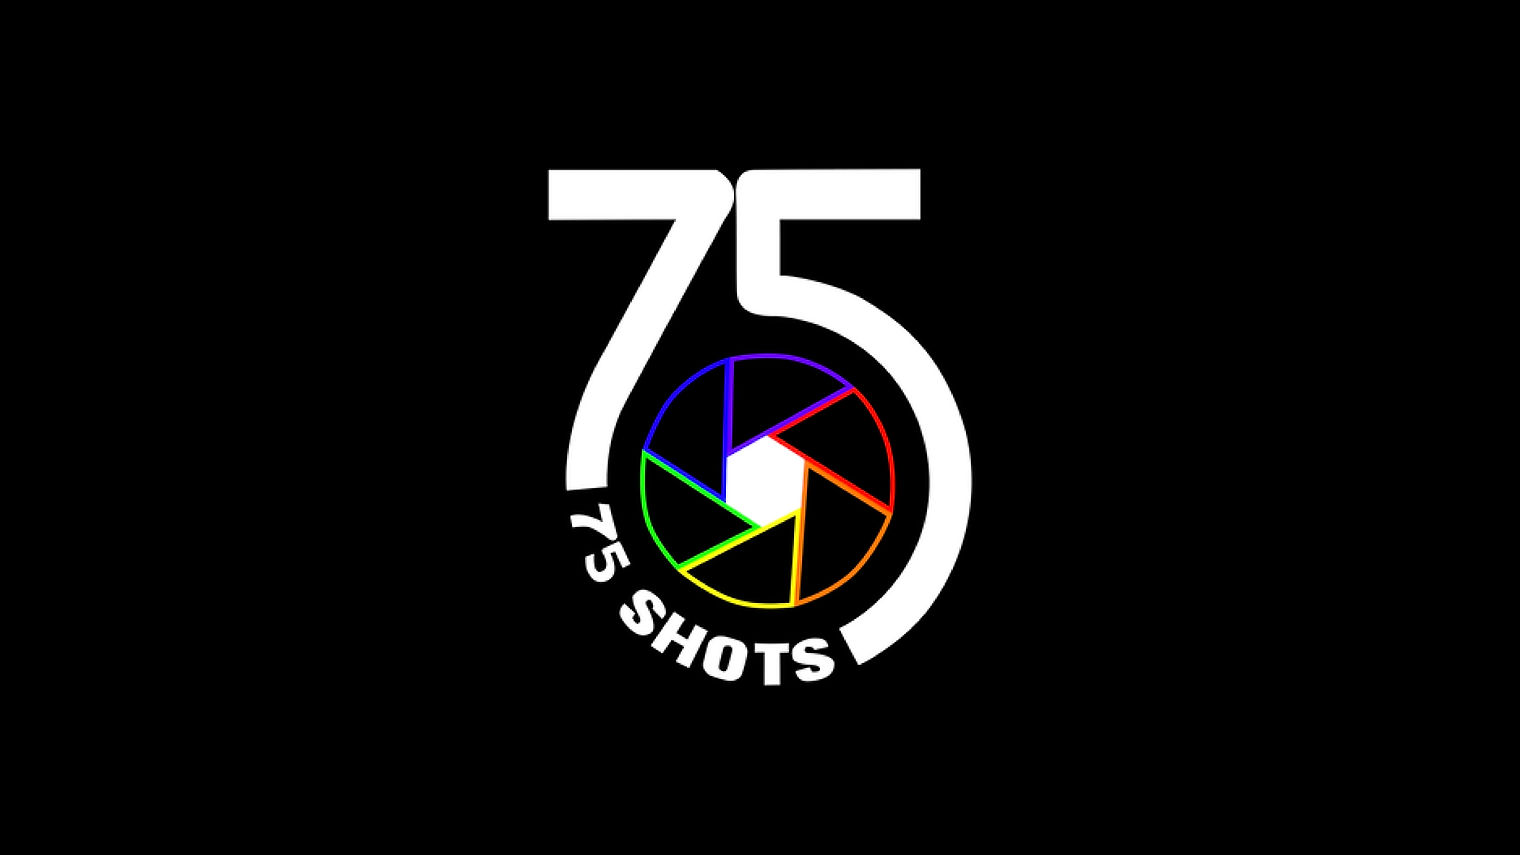 75 SHOTS